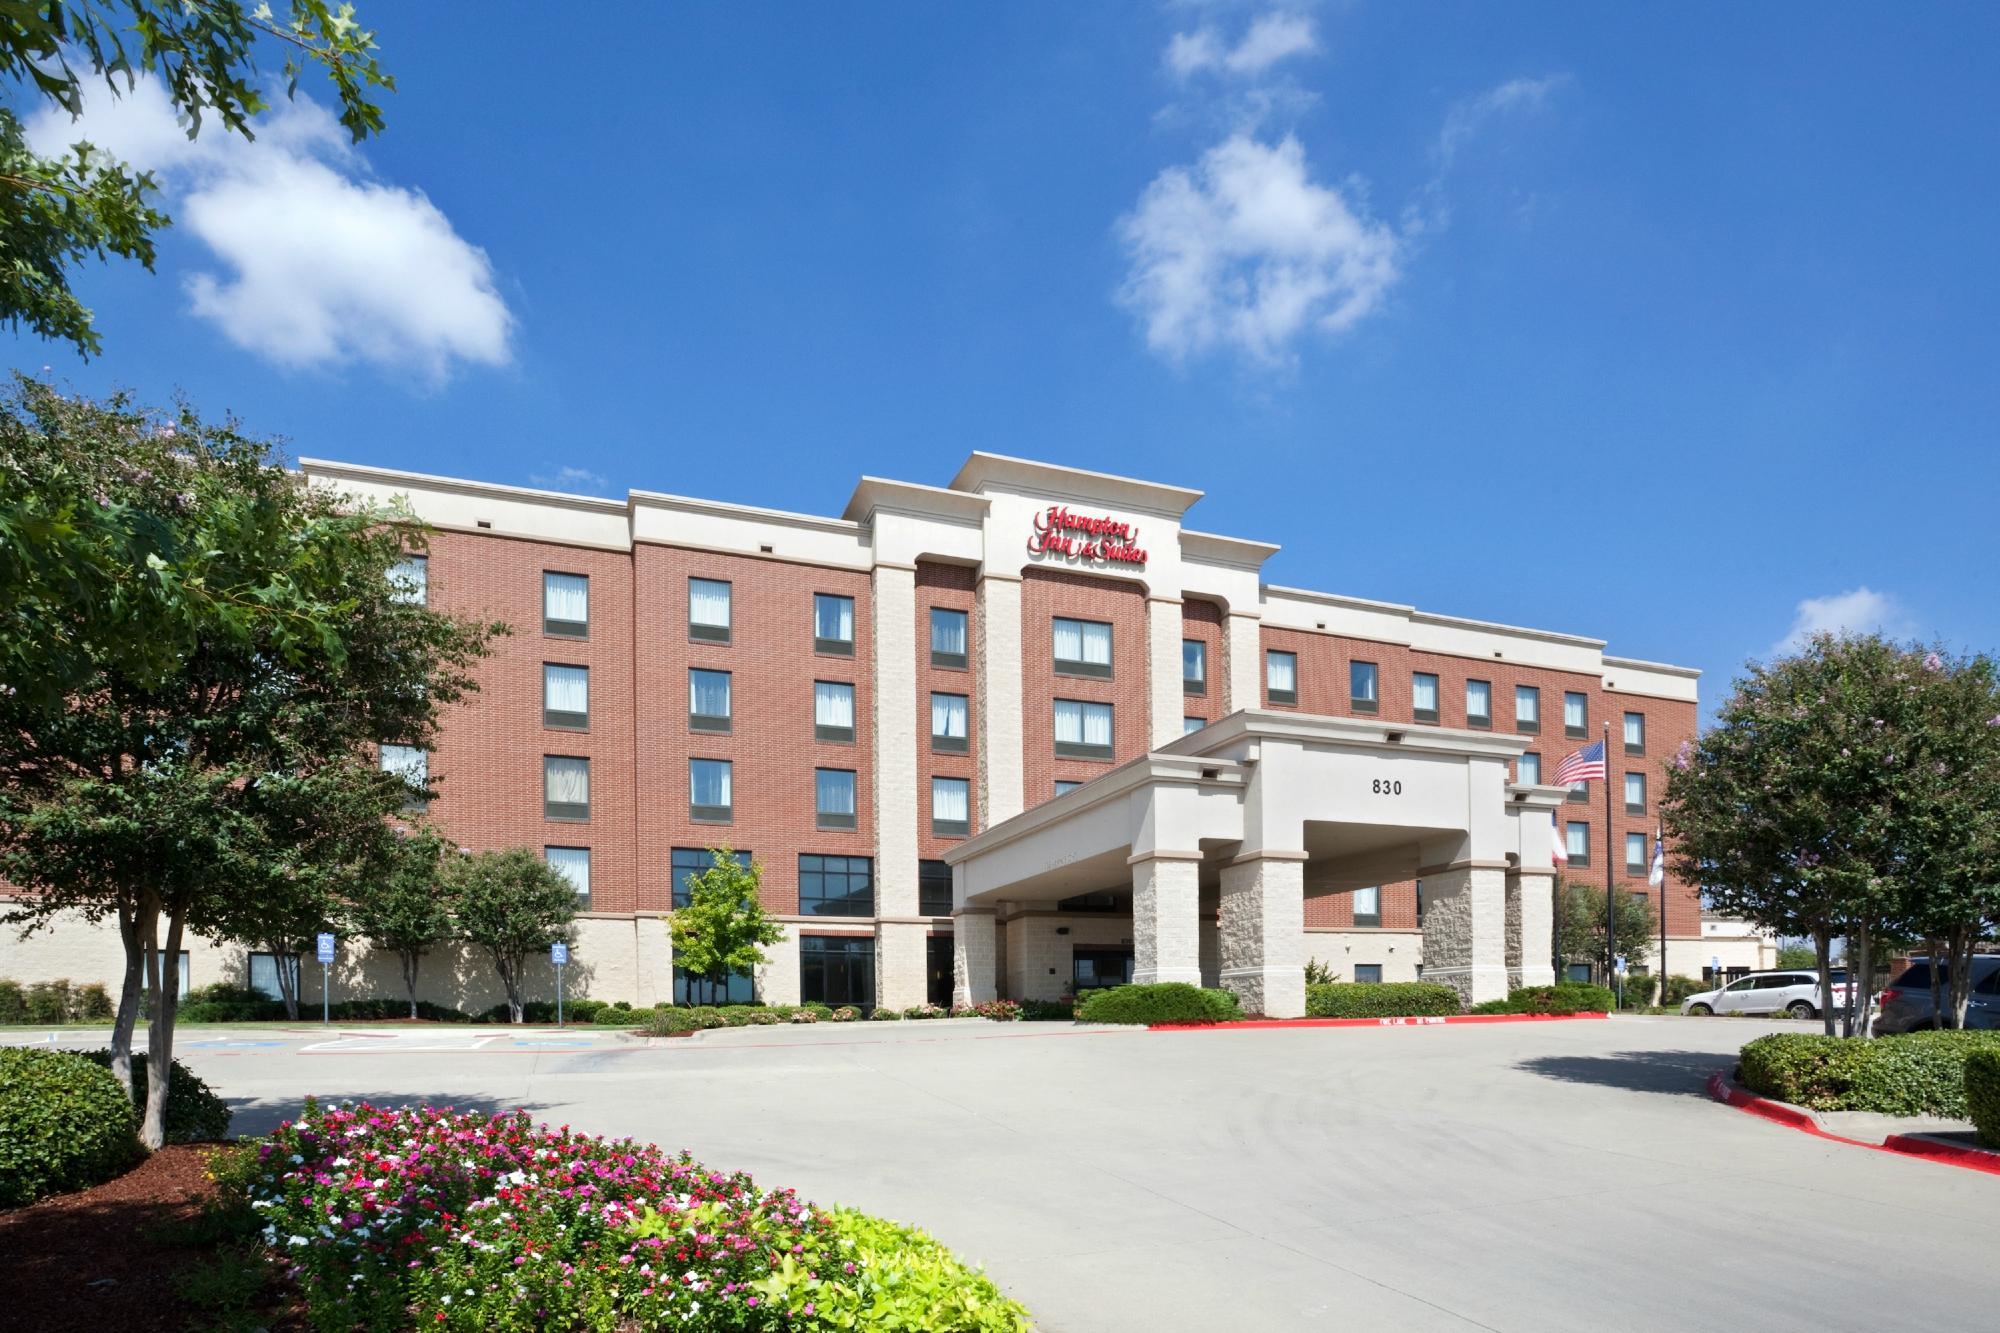 Photo of Hampton Inn & Suites-Dallas Allen, Allen, TX